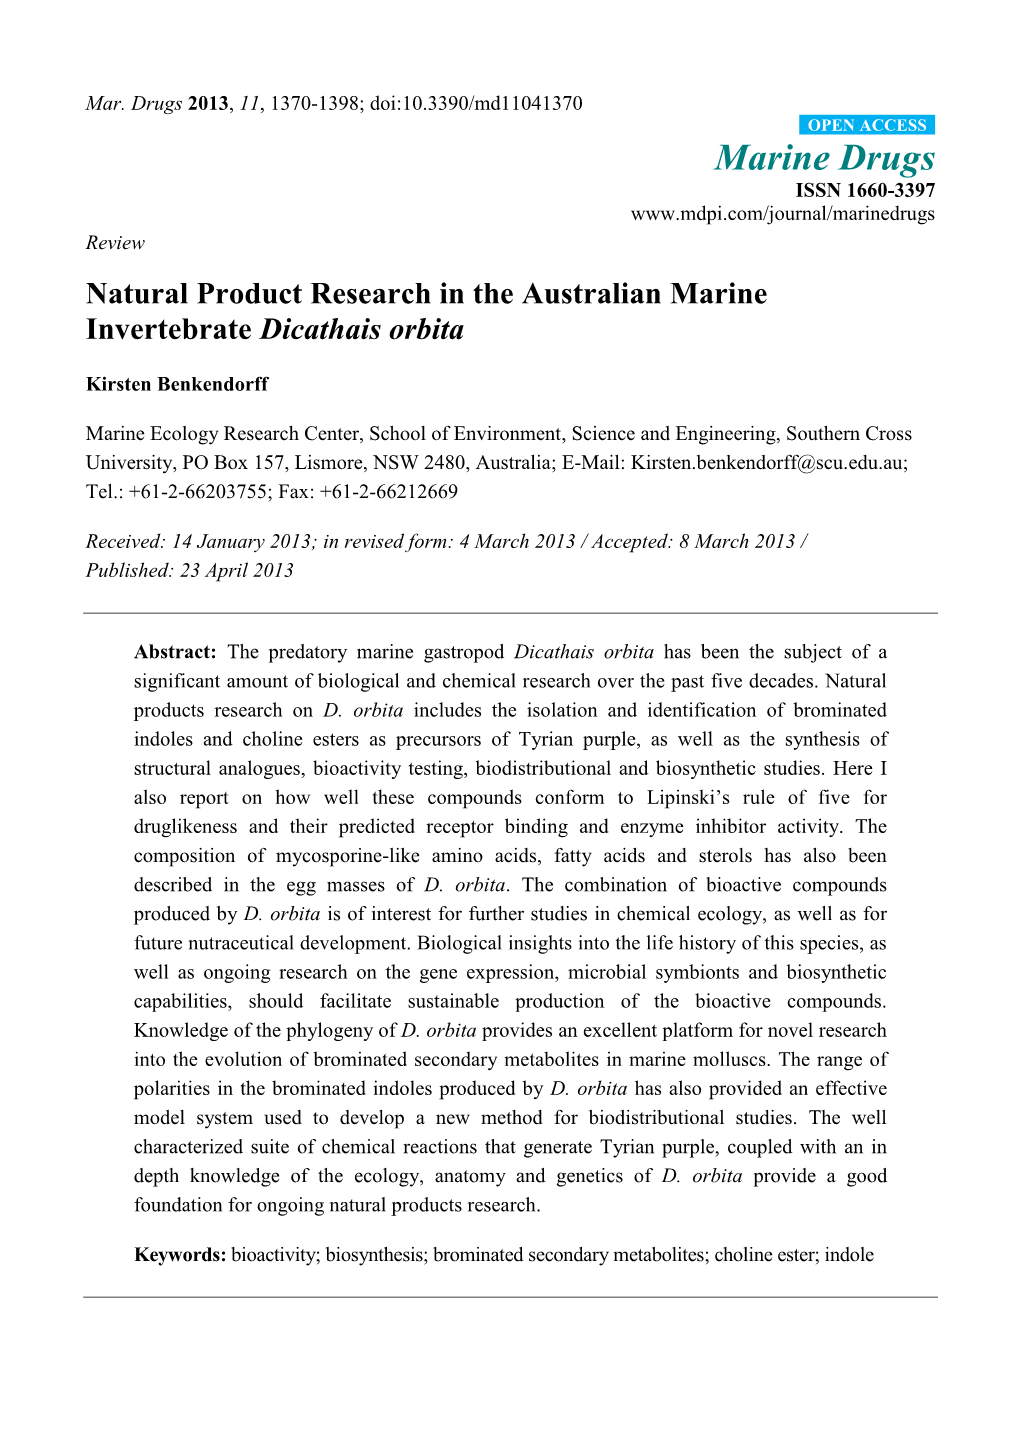 Natural Product Research in the Australian Marine Invertebrate Dicathais Orbita